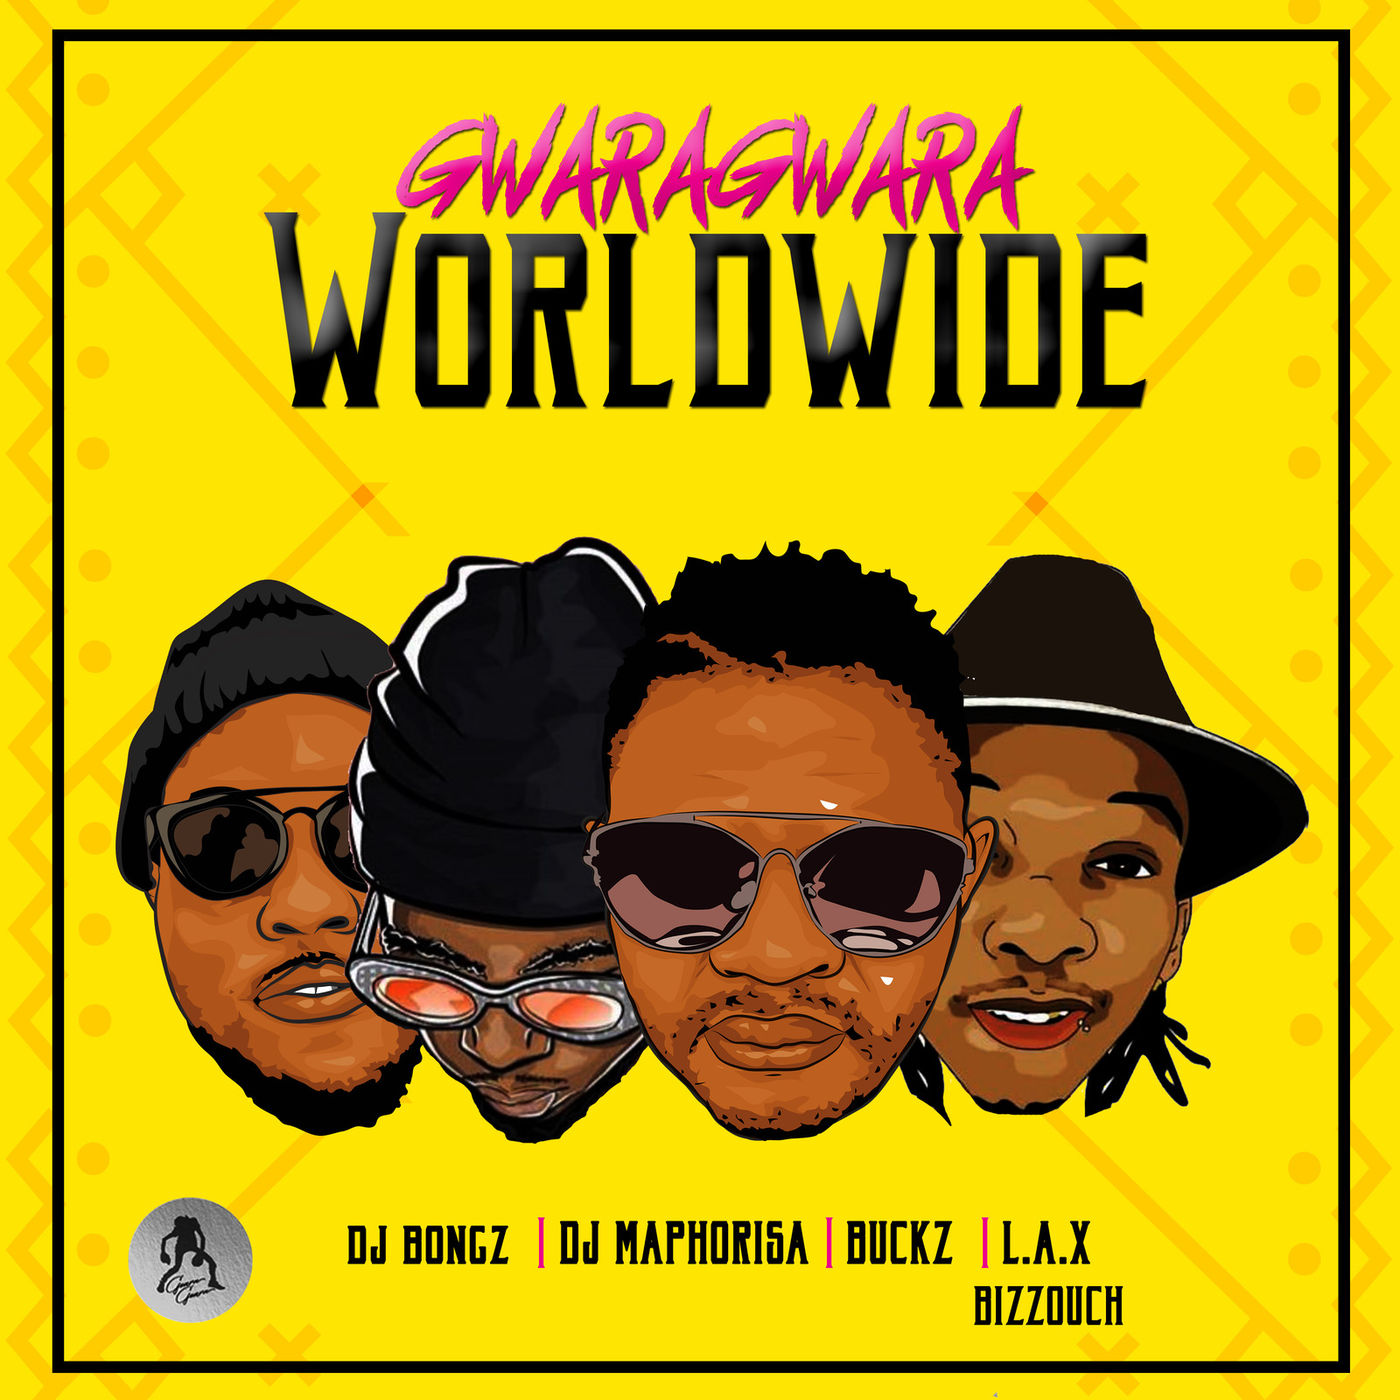 DJ Bongz, DJ Maphorisa - GwaraGwara Worldwide / Gwara Nation Entertainment